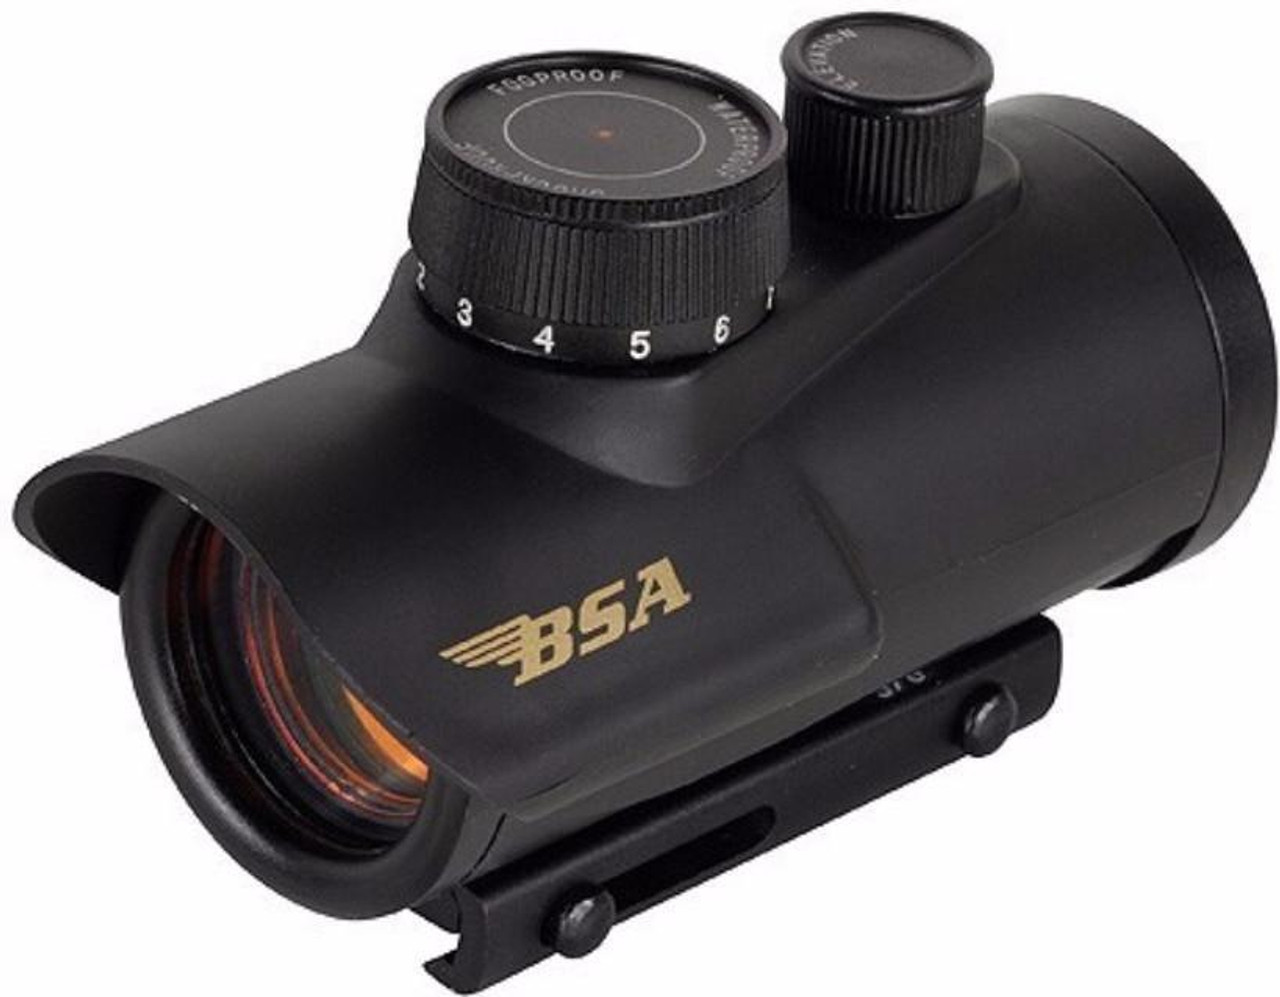 BSA Optics 30mm Matte Black Finish Red Dot Sight | 5 Moa